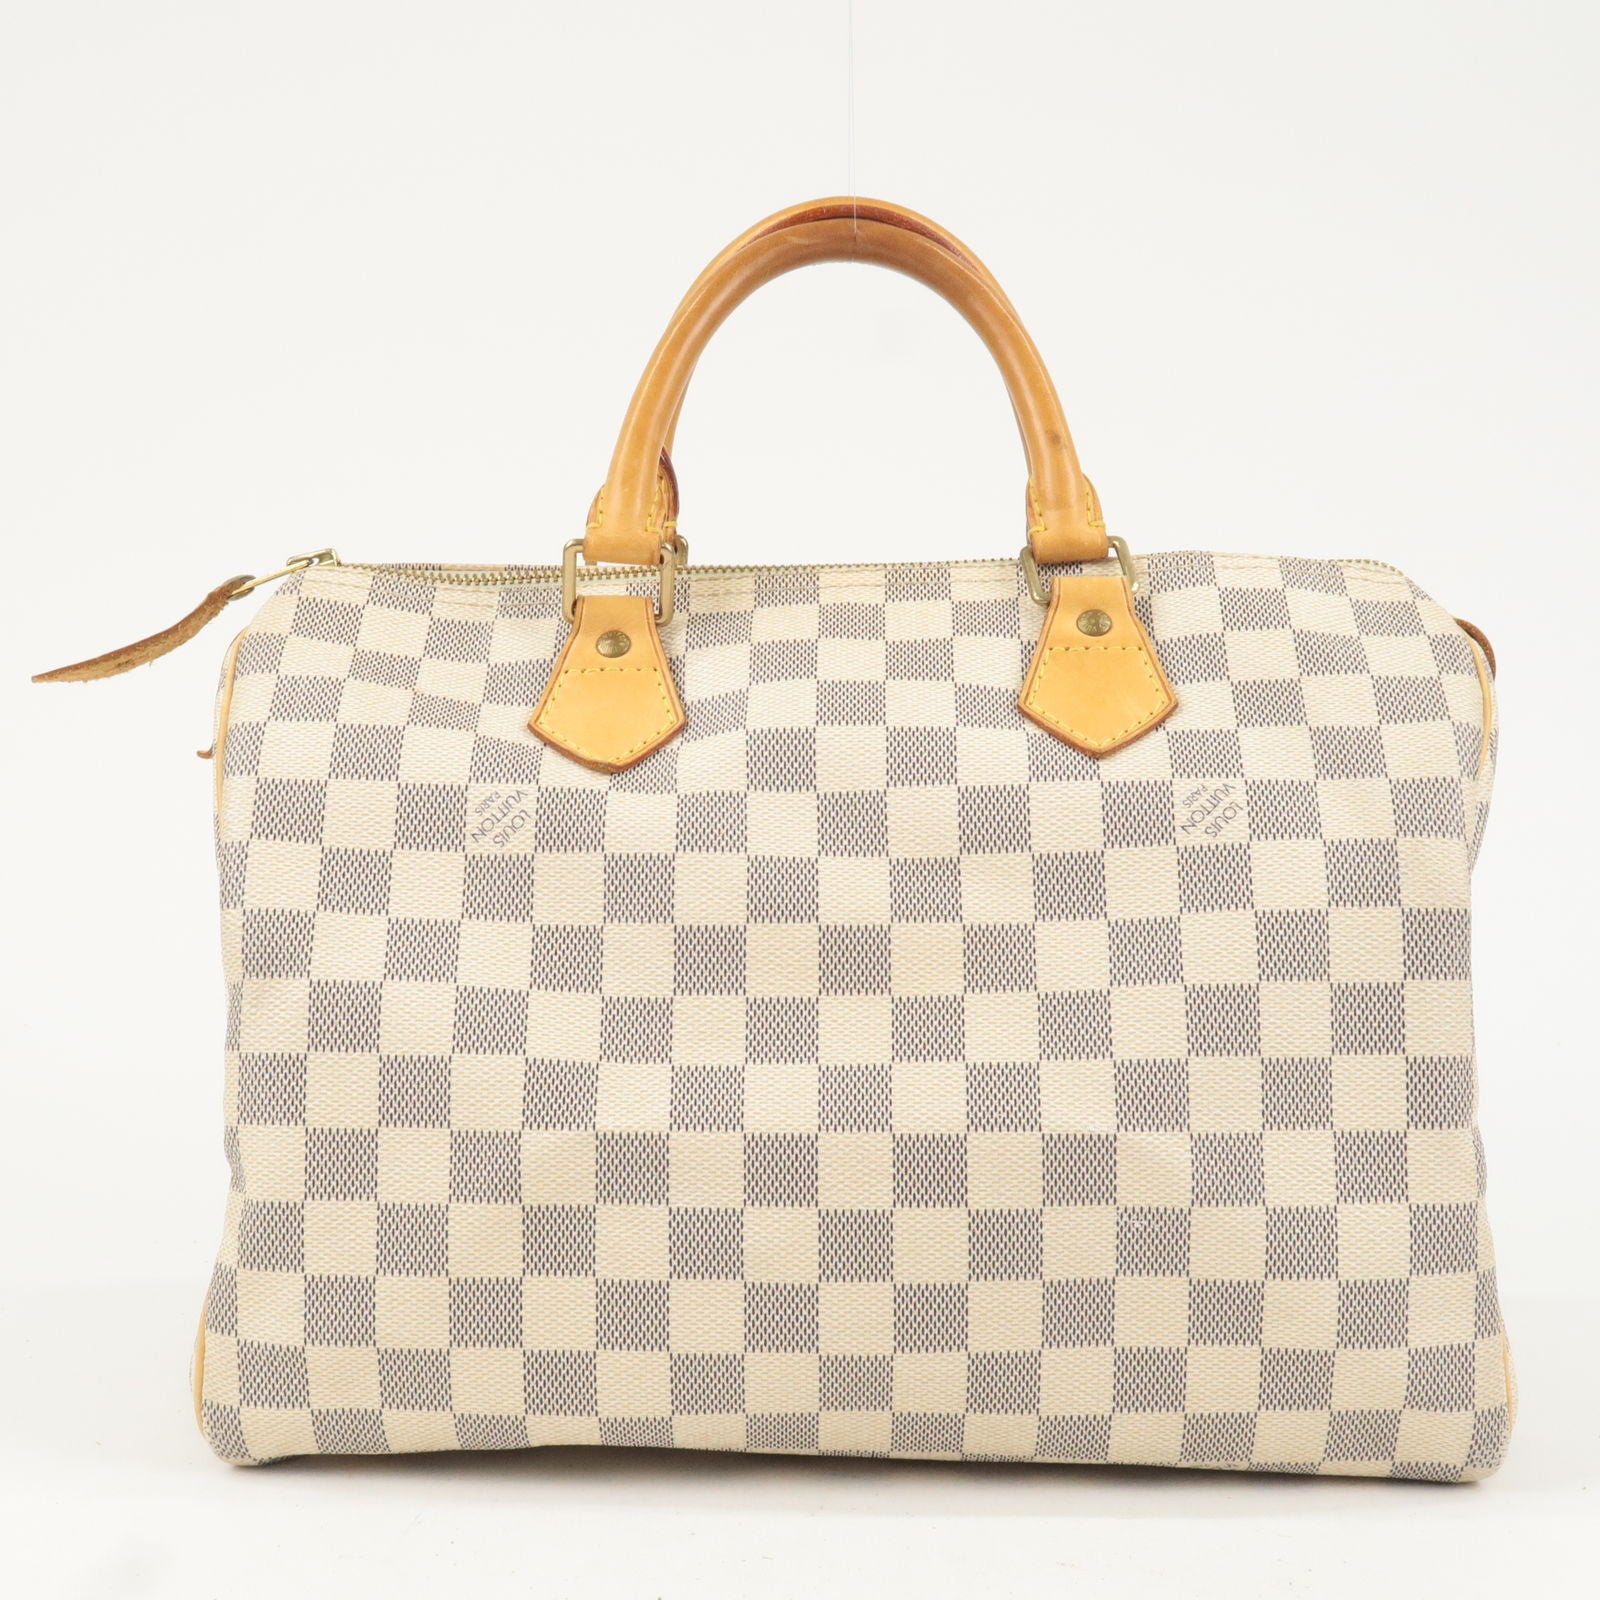 100% Authentic Louis Vuitton Speedy 30 White Damier Azur Hand Bag